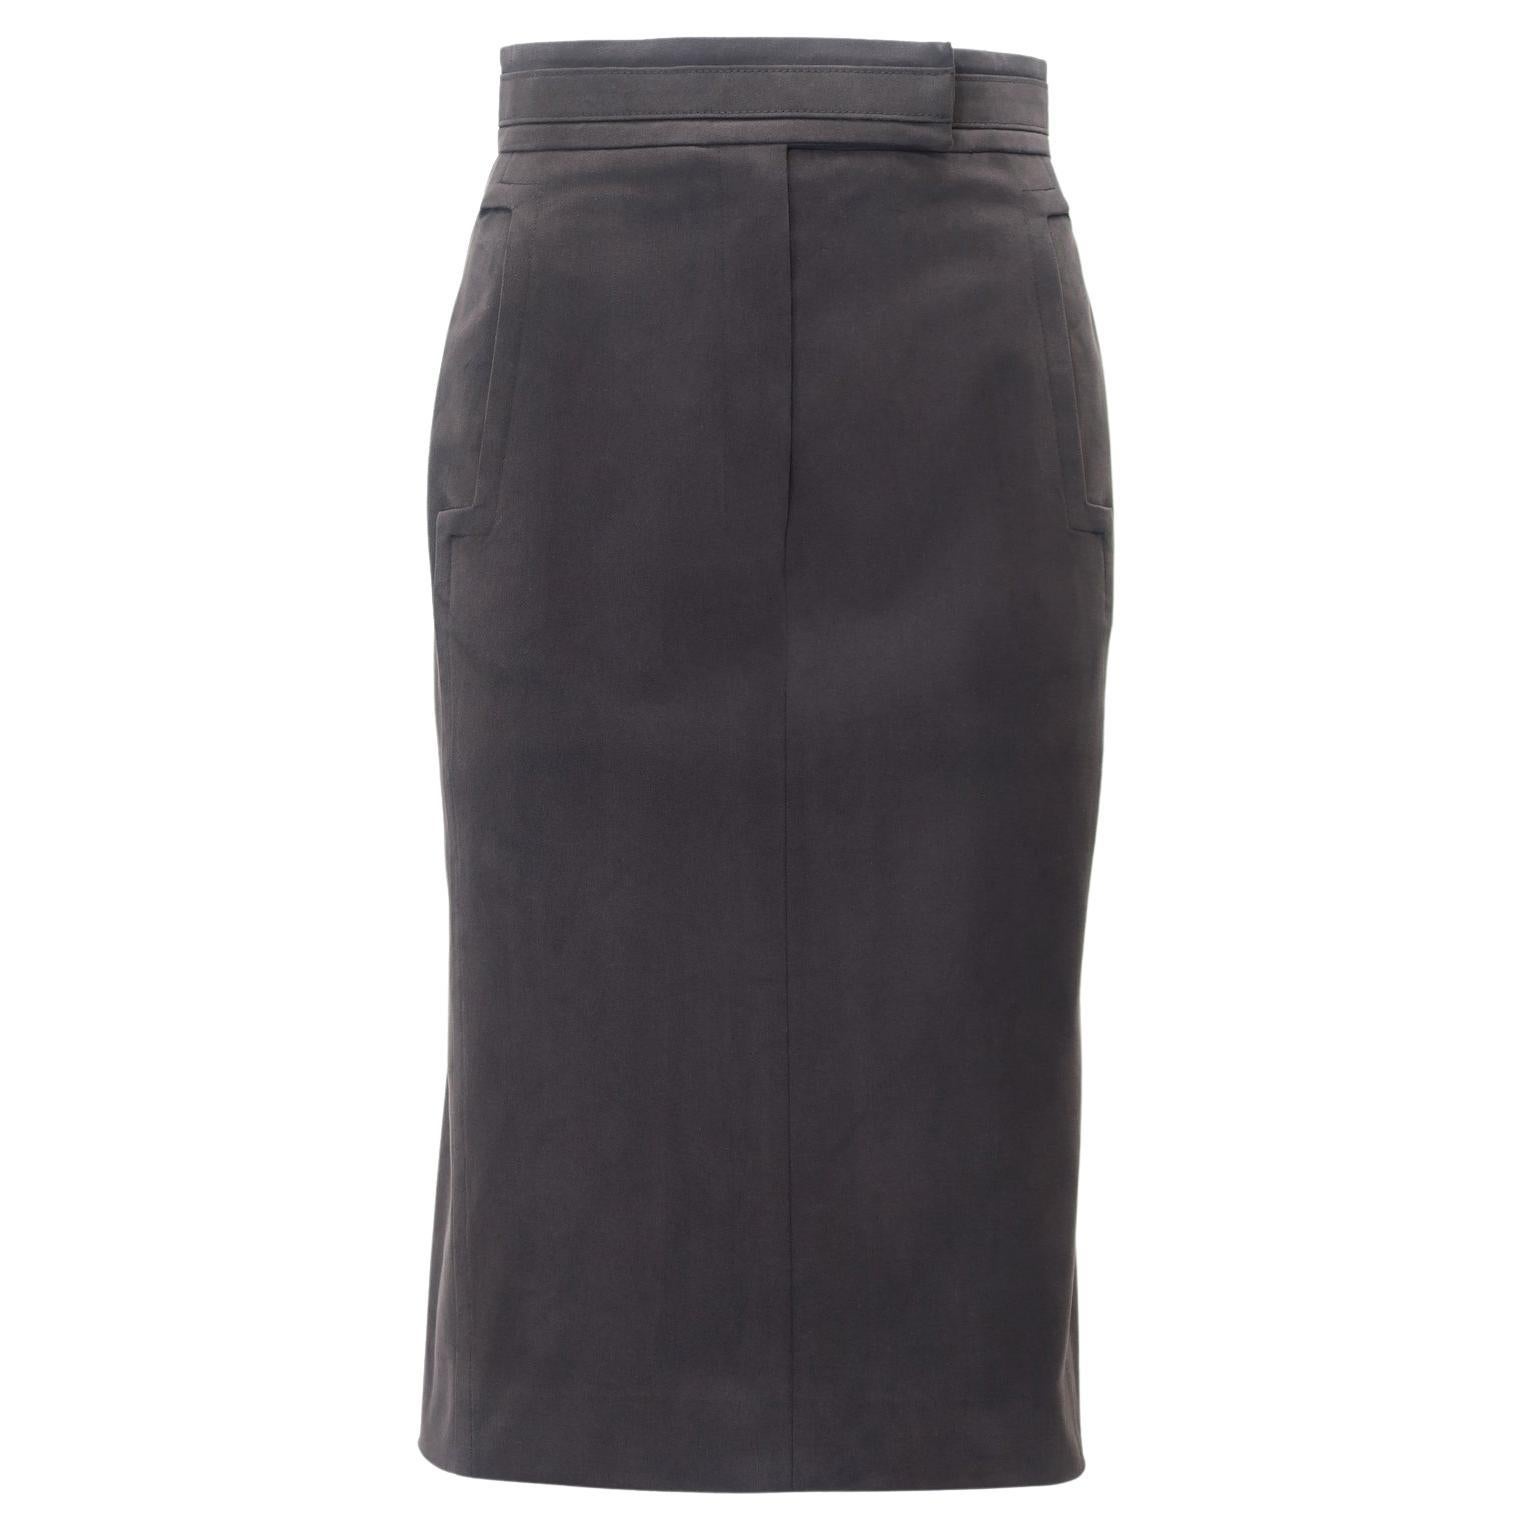 Yves Saint Laurent by Tom Ford FW-2003 Higher Waist Skirt with Belt Detailing